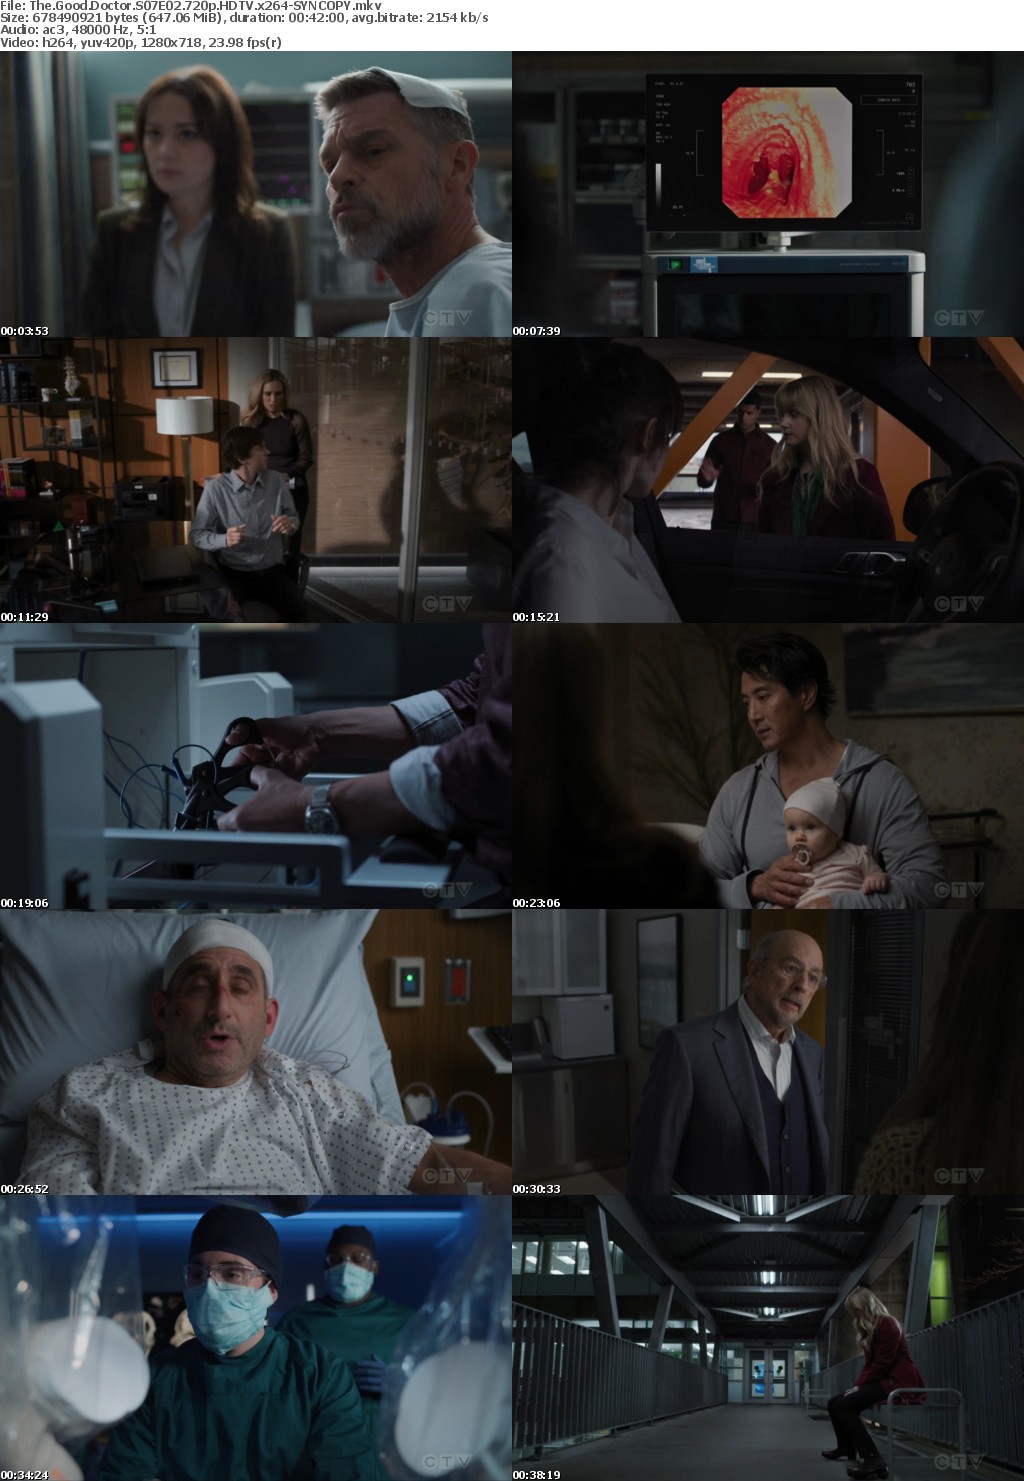 The Good Doctor S07E02 720p HDTV x264-SYNCOPY